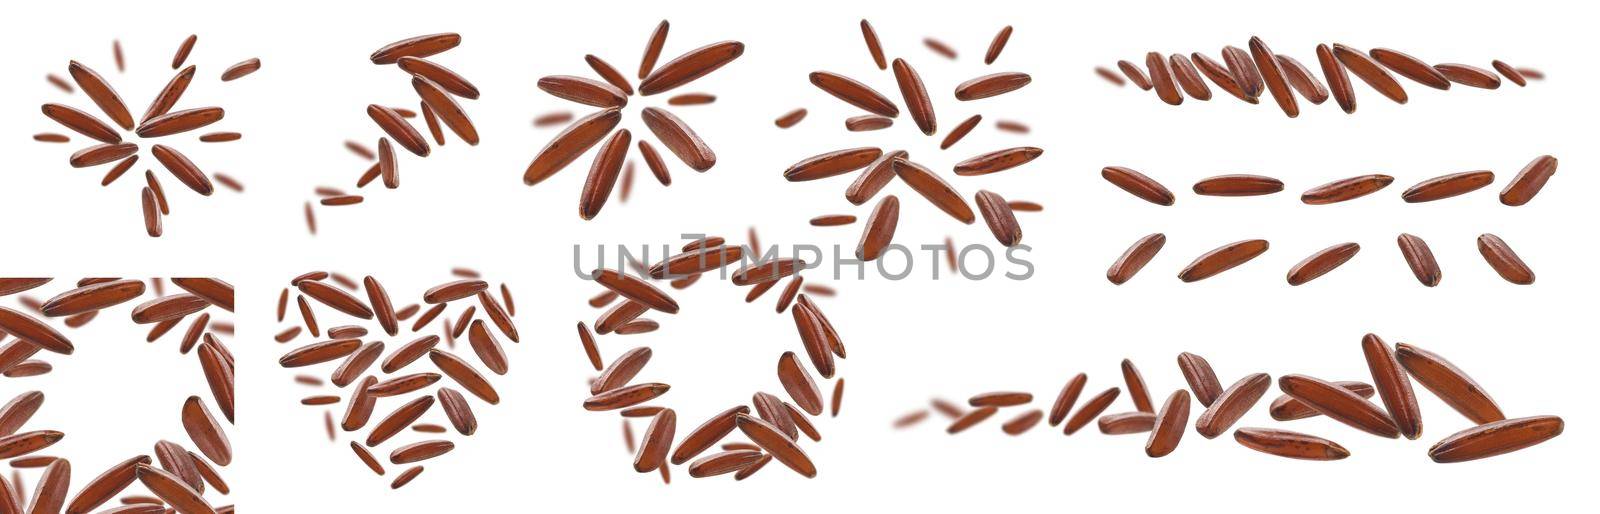 A set of photos. Raw brown rice levitates on a white background.